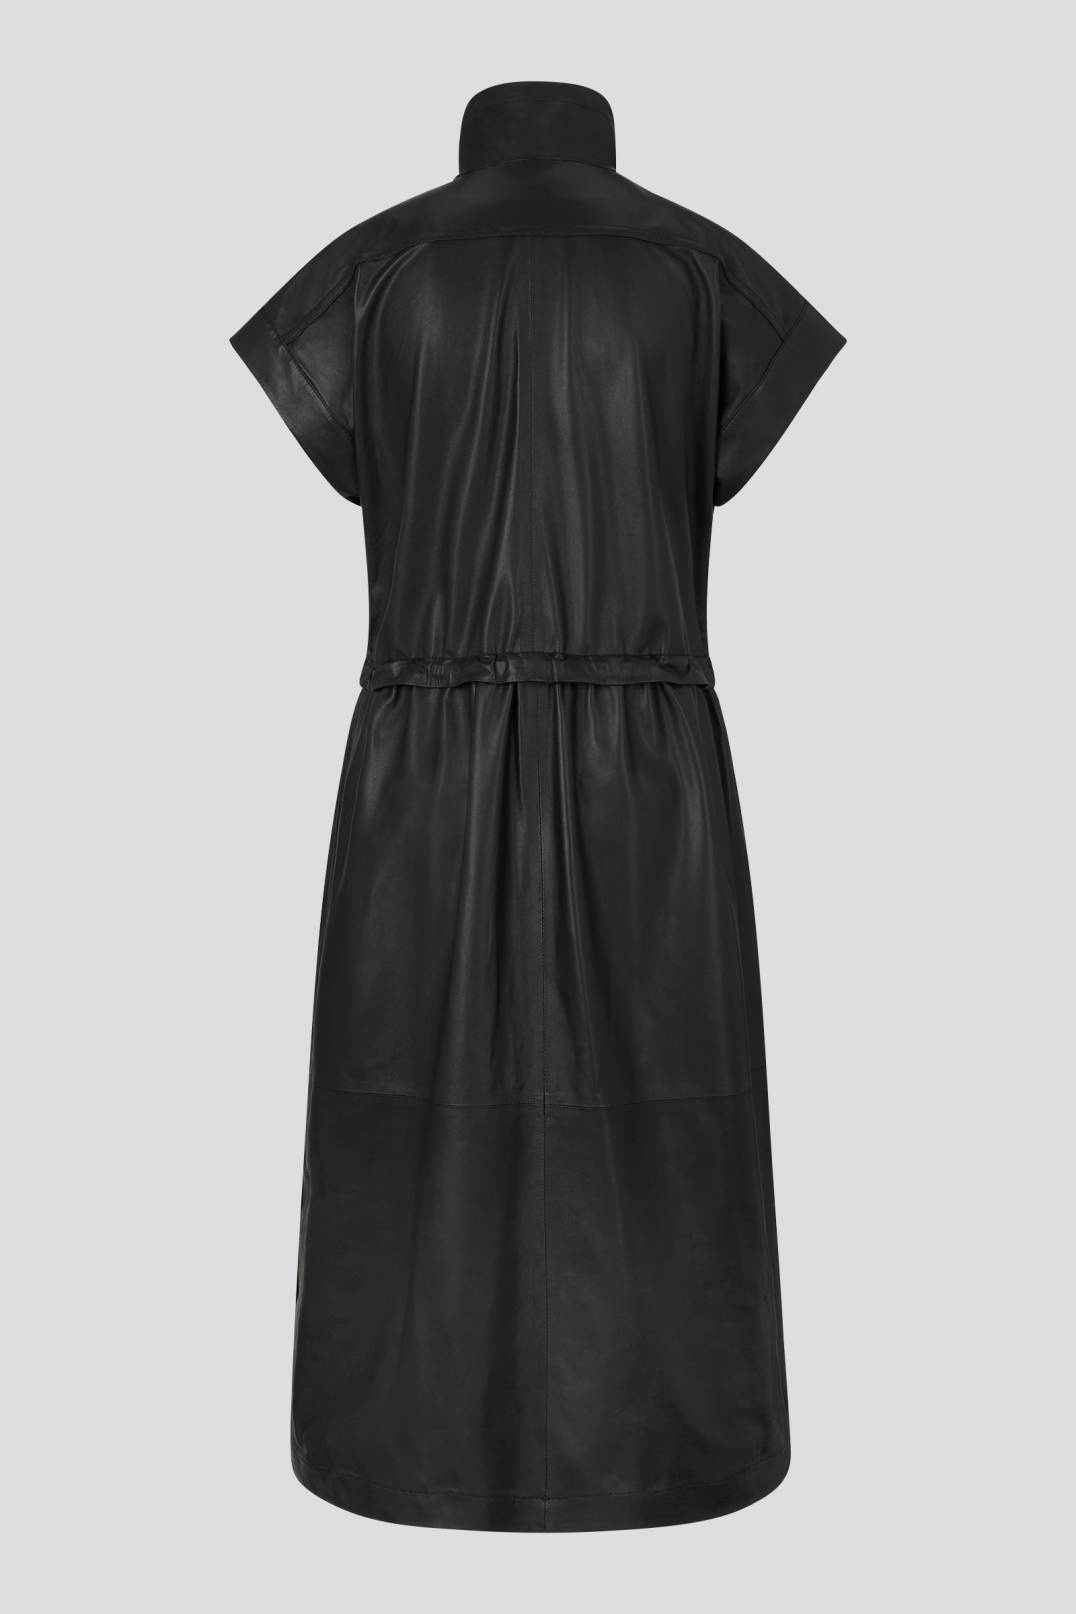 GLORIA LEATHER DRESS IN BLACK - 5